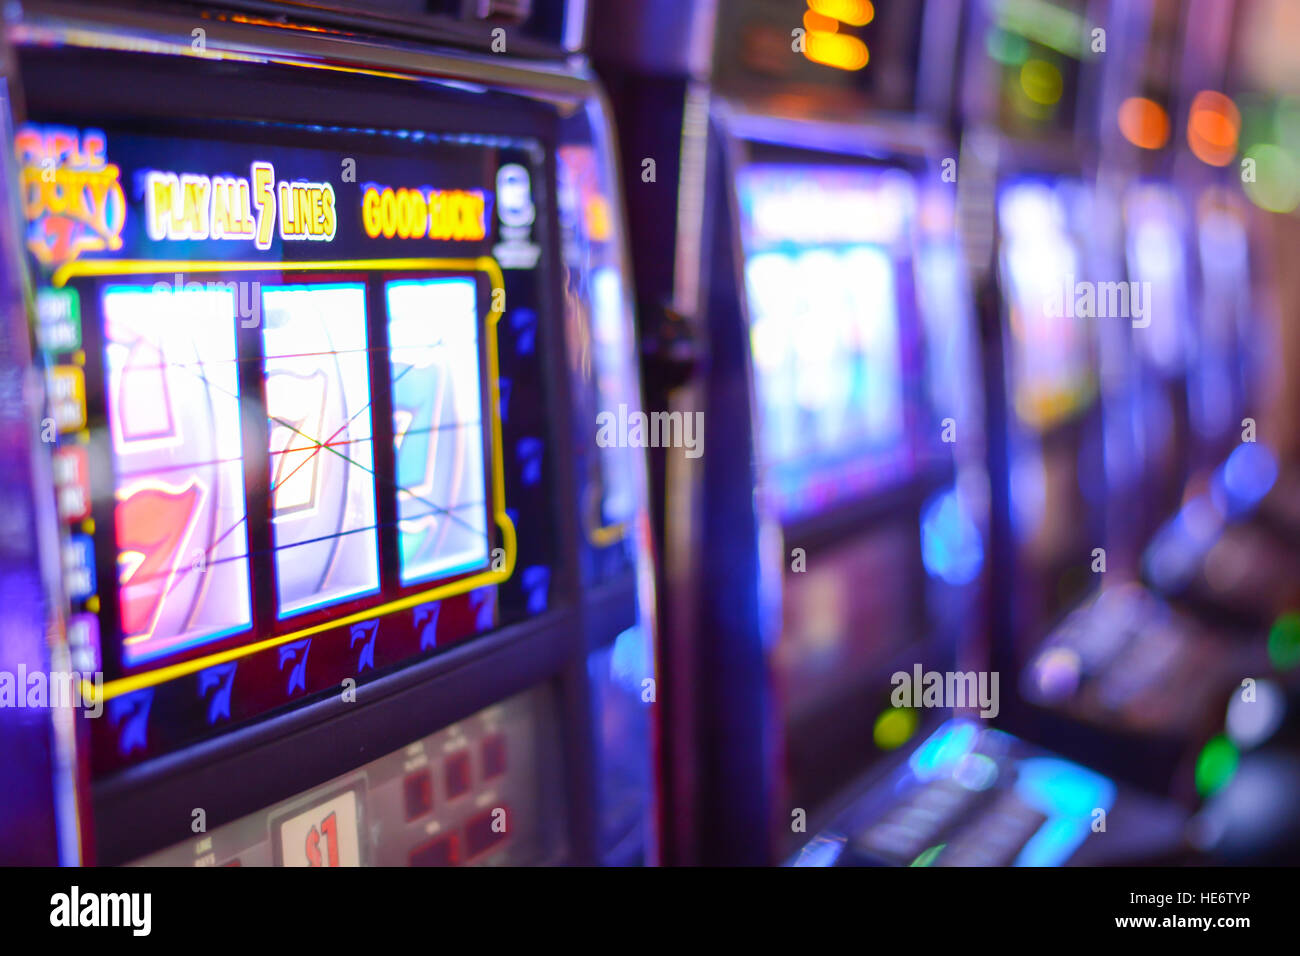 Slot machines and gambling addiction in Las Vegas Stock Photo